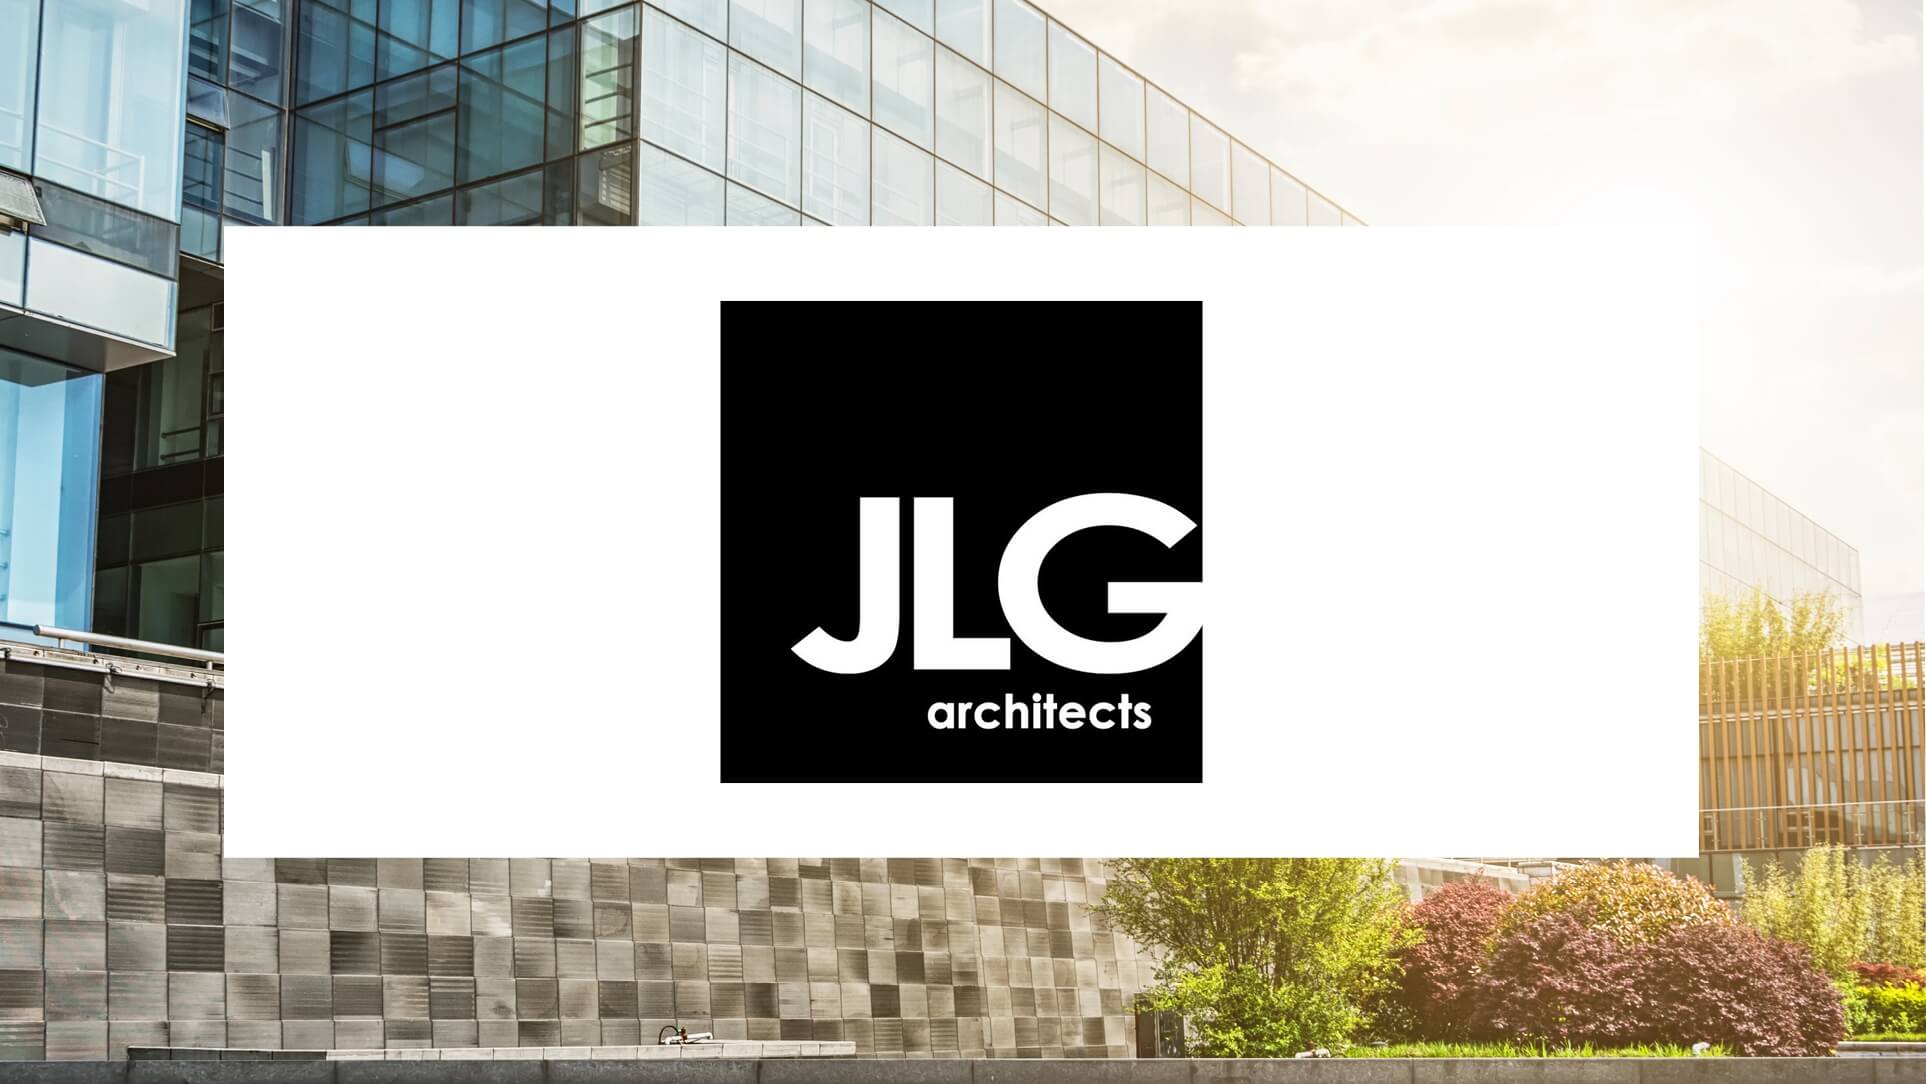 19-040 JLG Architects Teams Case Study OG 1926x1084 v1.jpg